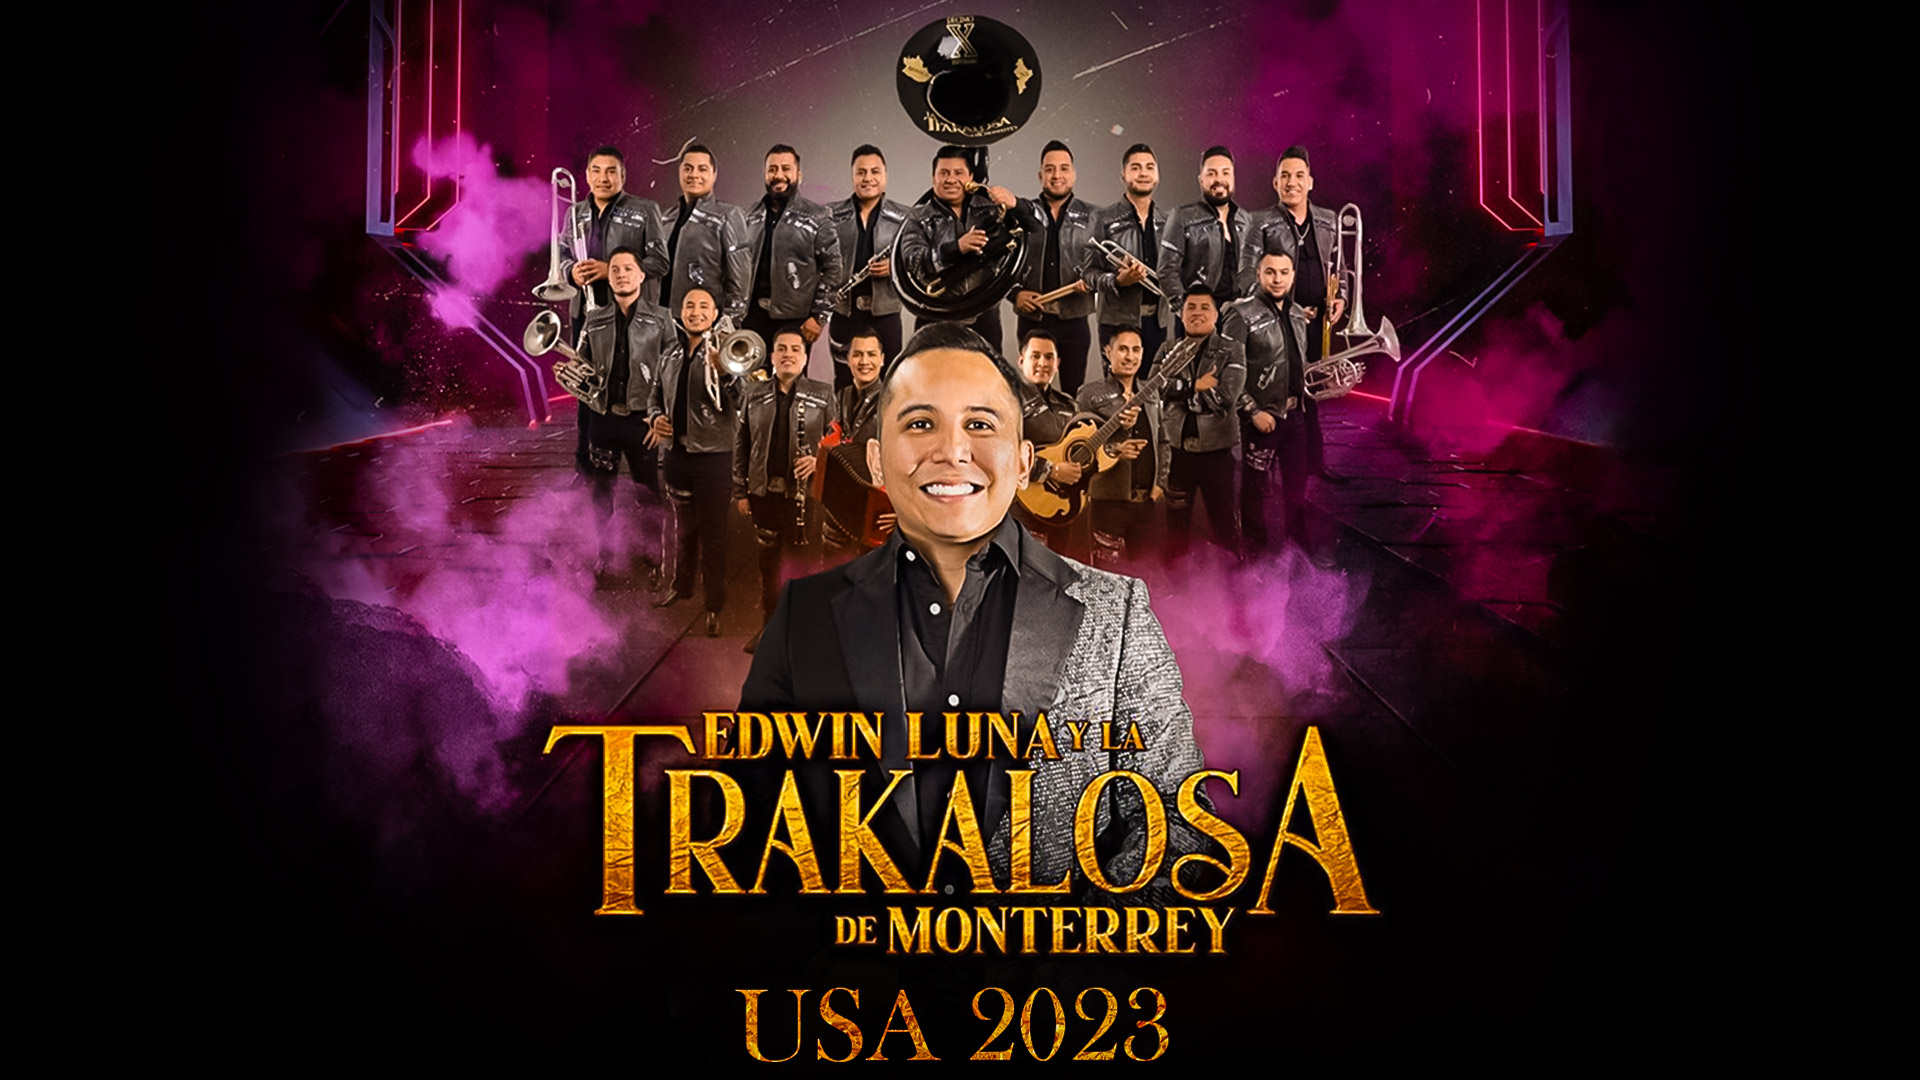 Edwin Luna y La Trakalosa de Monterrey Tour 2023